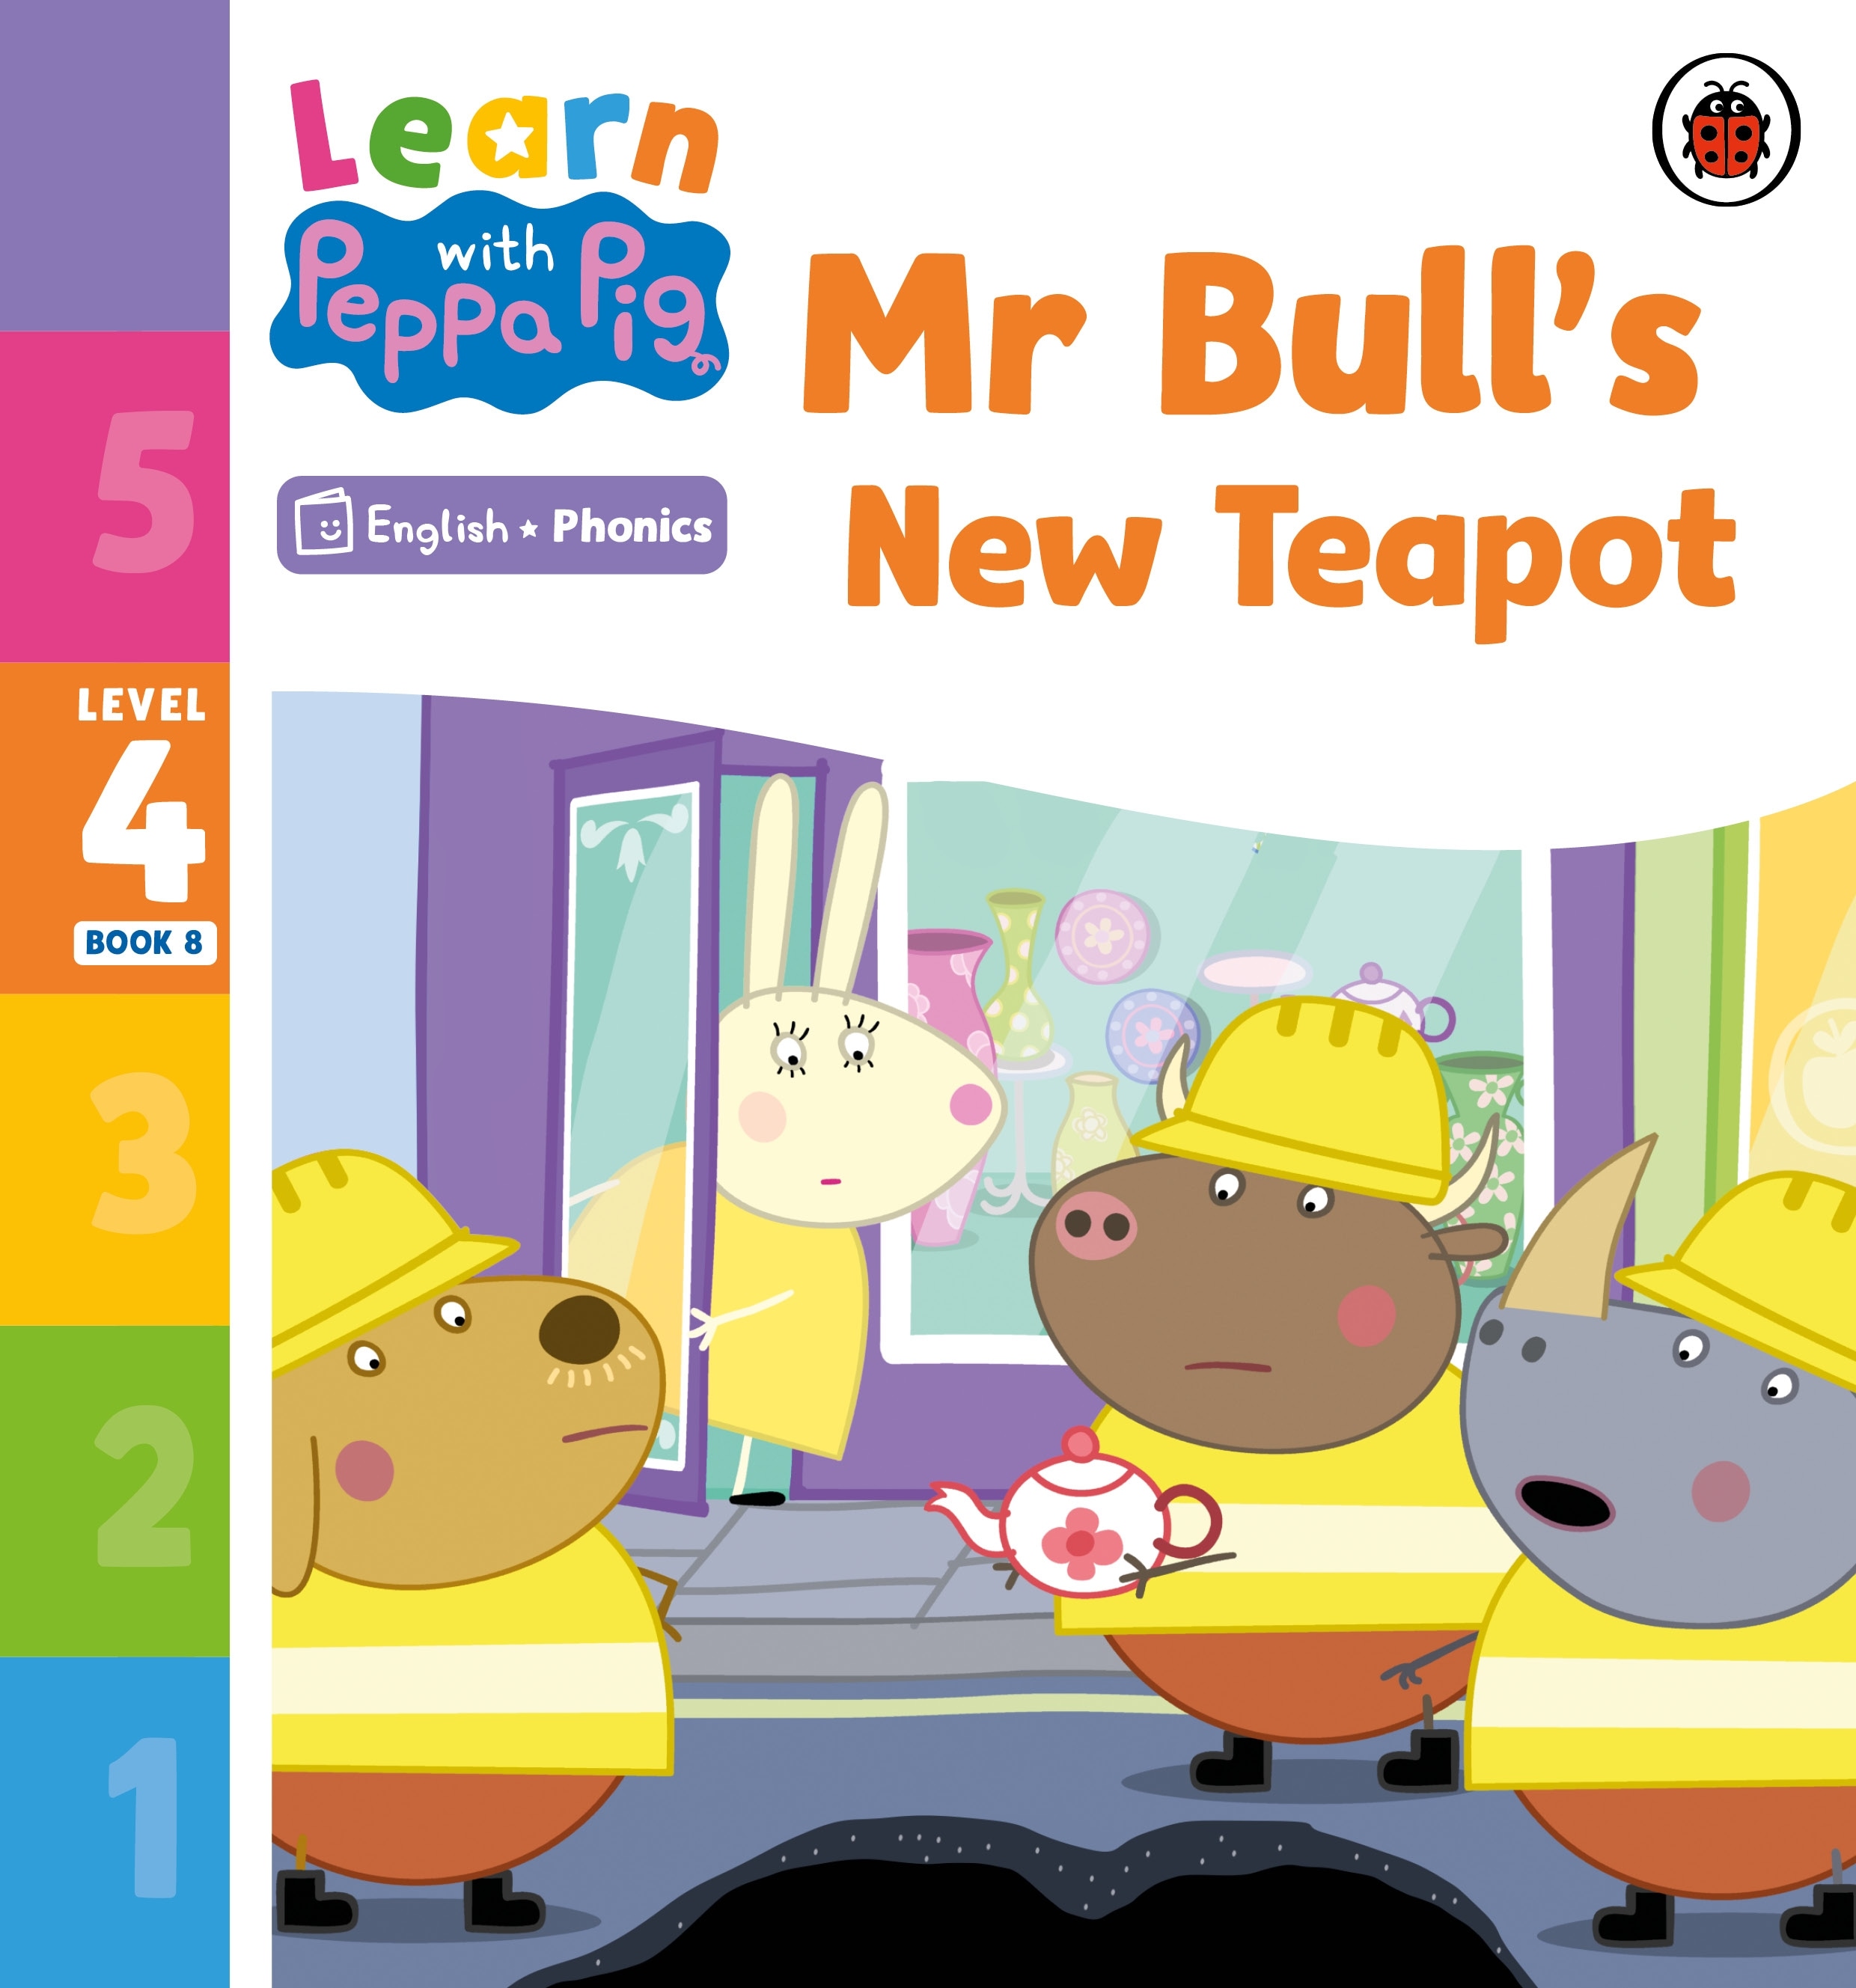 Learn with Peppa Phonics Level 4 Book 8 — Mr Bull's New Teapot (Phonics Reader)